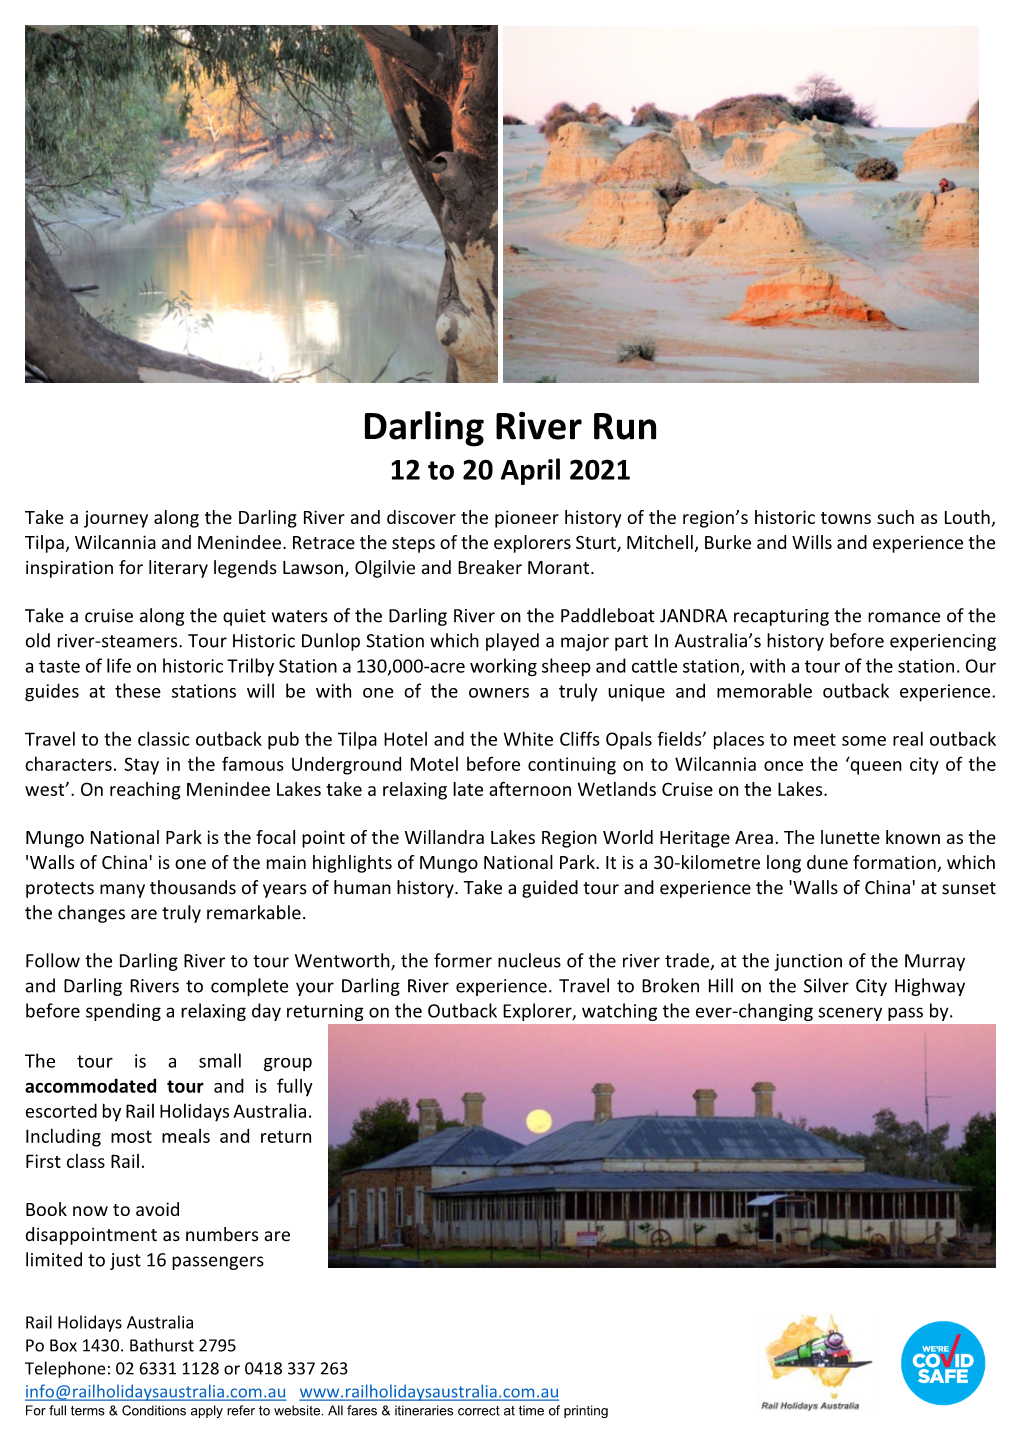 Darling River Run 12 to 20 April 2021